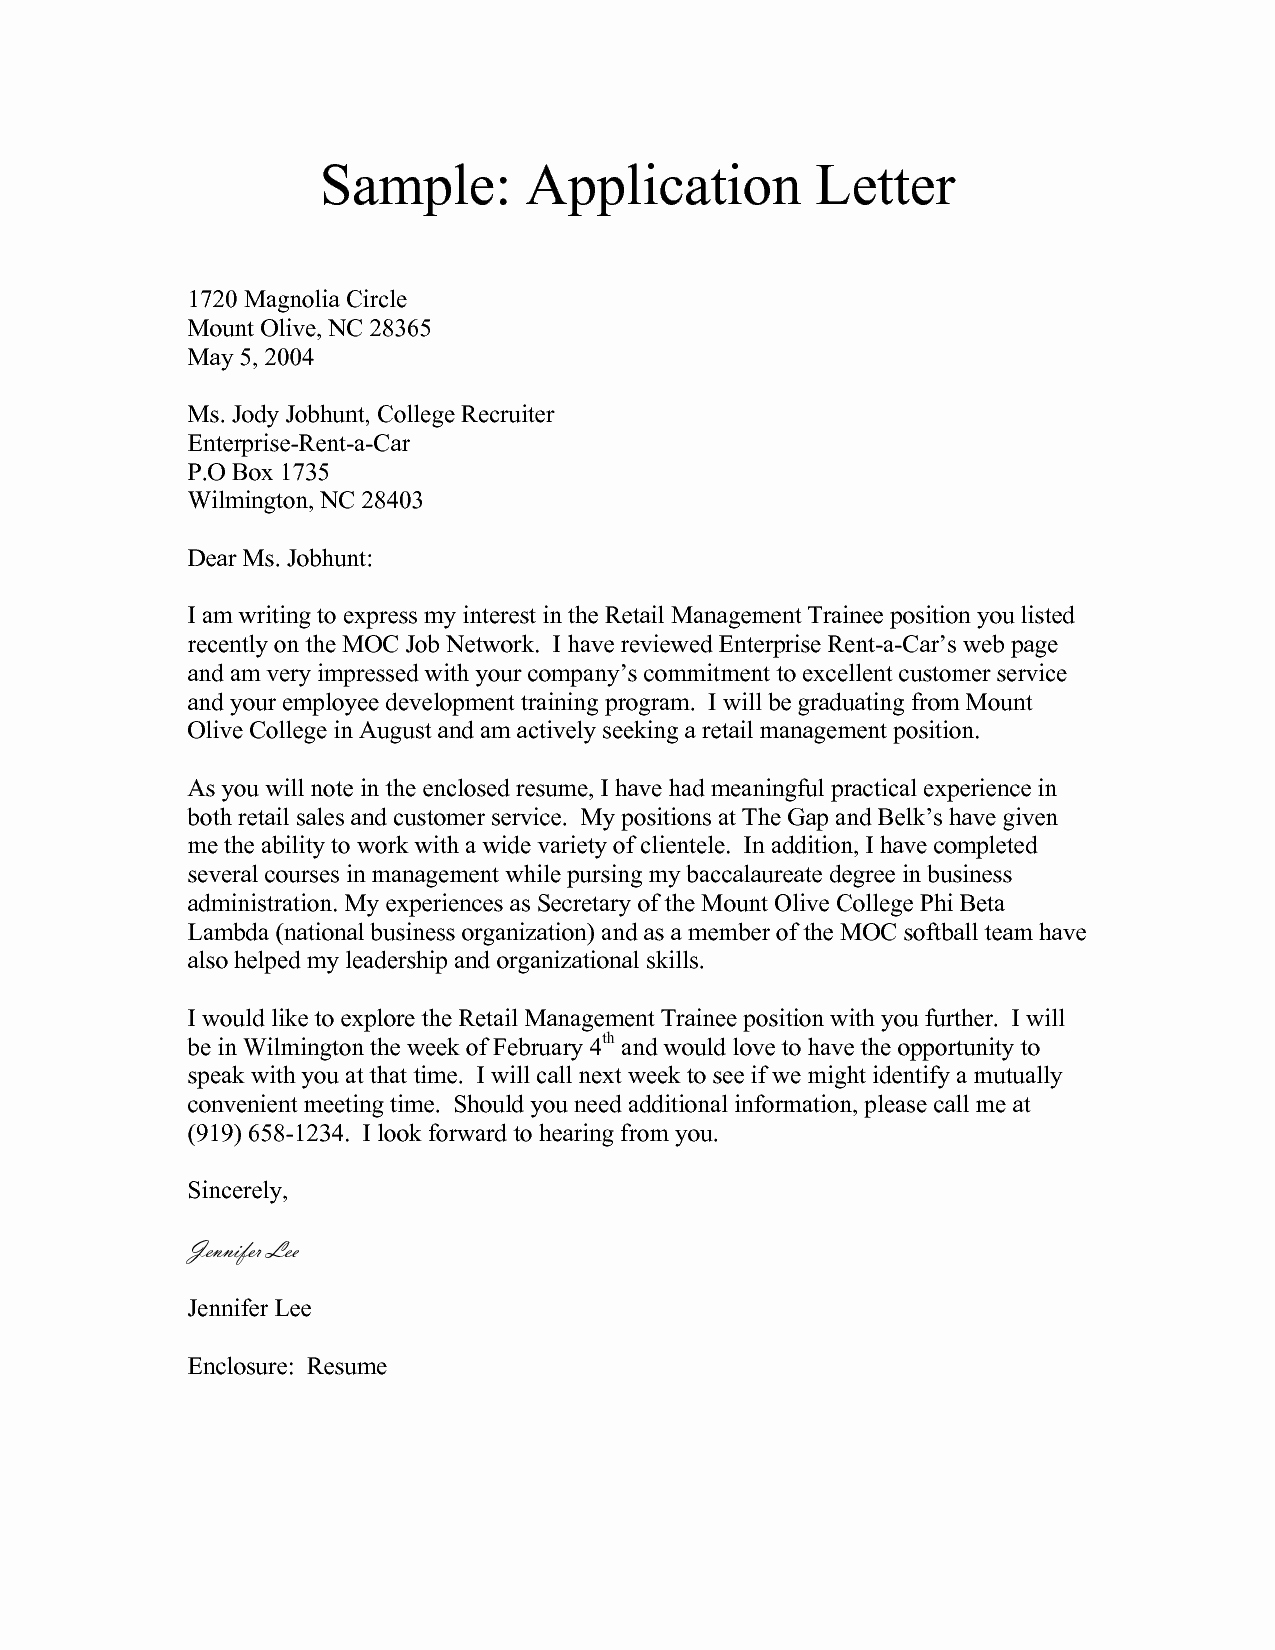 Application for A Job Letter Unique Download Free Application Letters